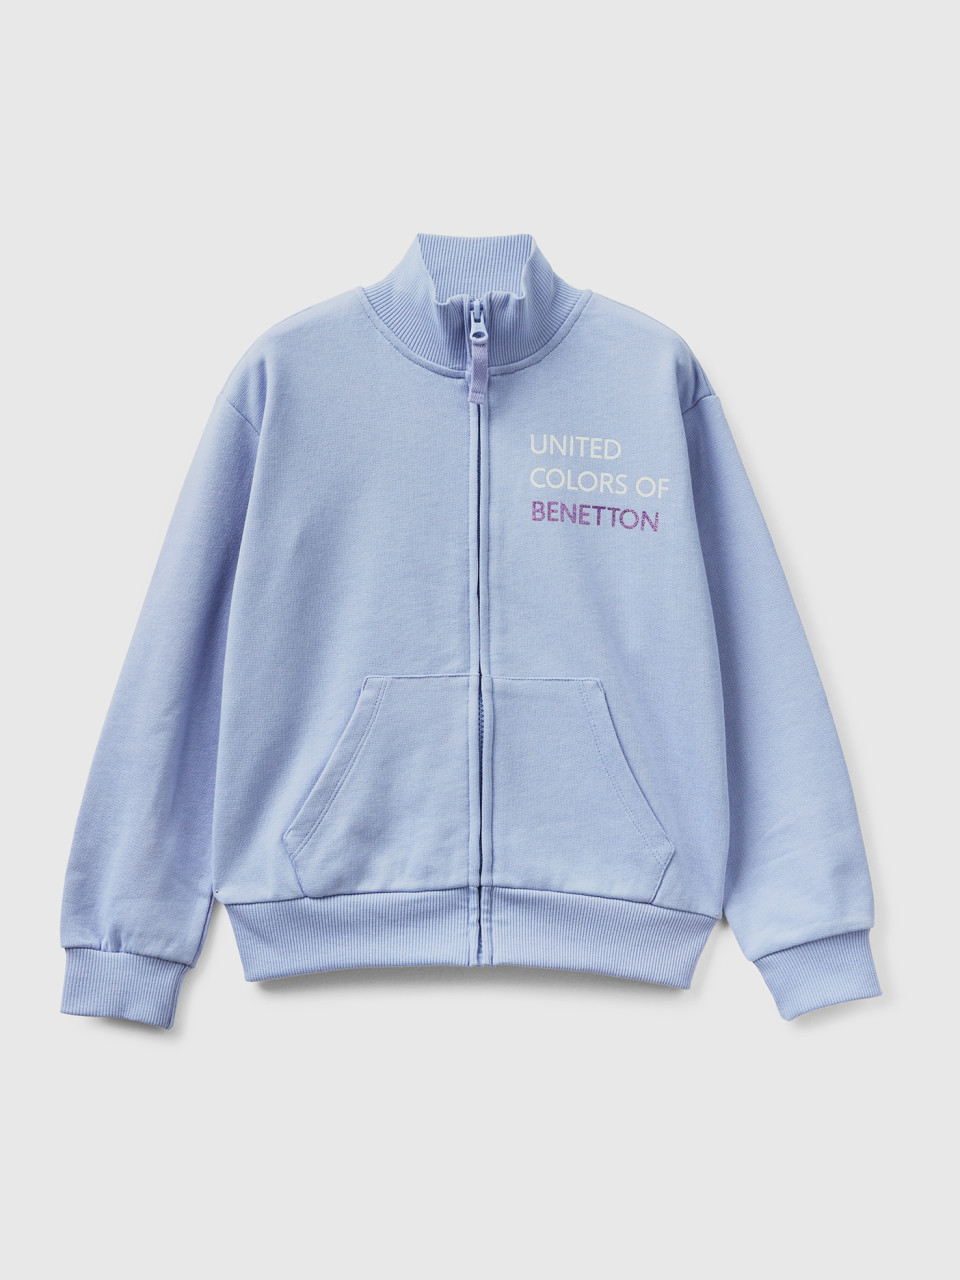 Benetton, Sweatshirt With Zip And Collar, Lilac, Kids